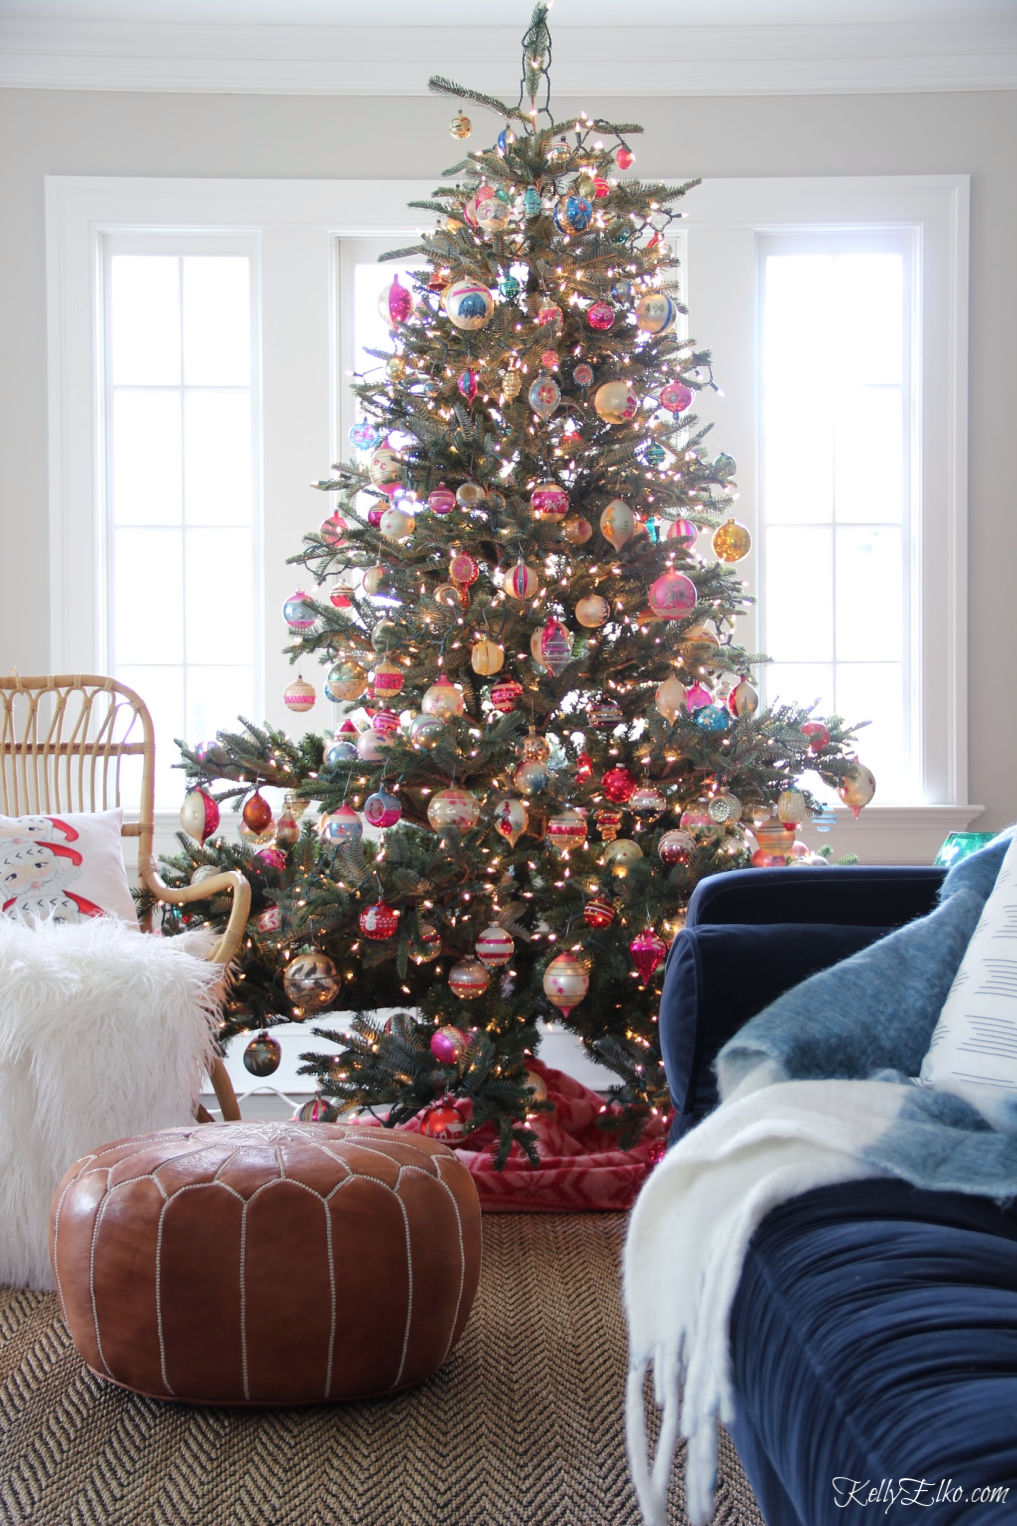 Shiny Brite Christmas Tree - she hung over 300 vintage ornaments on this tree! kellyelko.com #christmas #christmastree #christmasornaments #vintagechristmas #vintagecollections #shinybrite #kellyelko